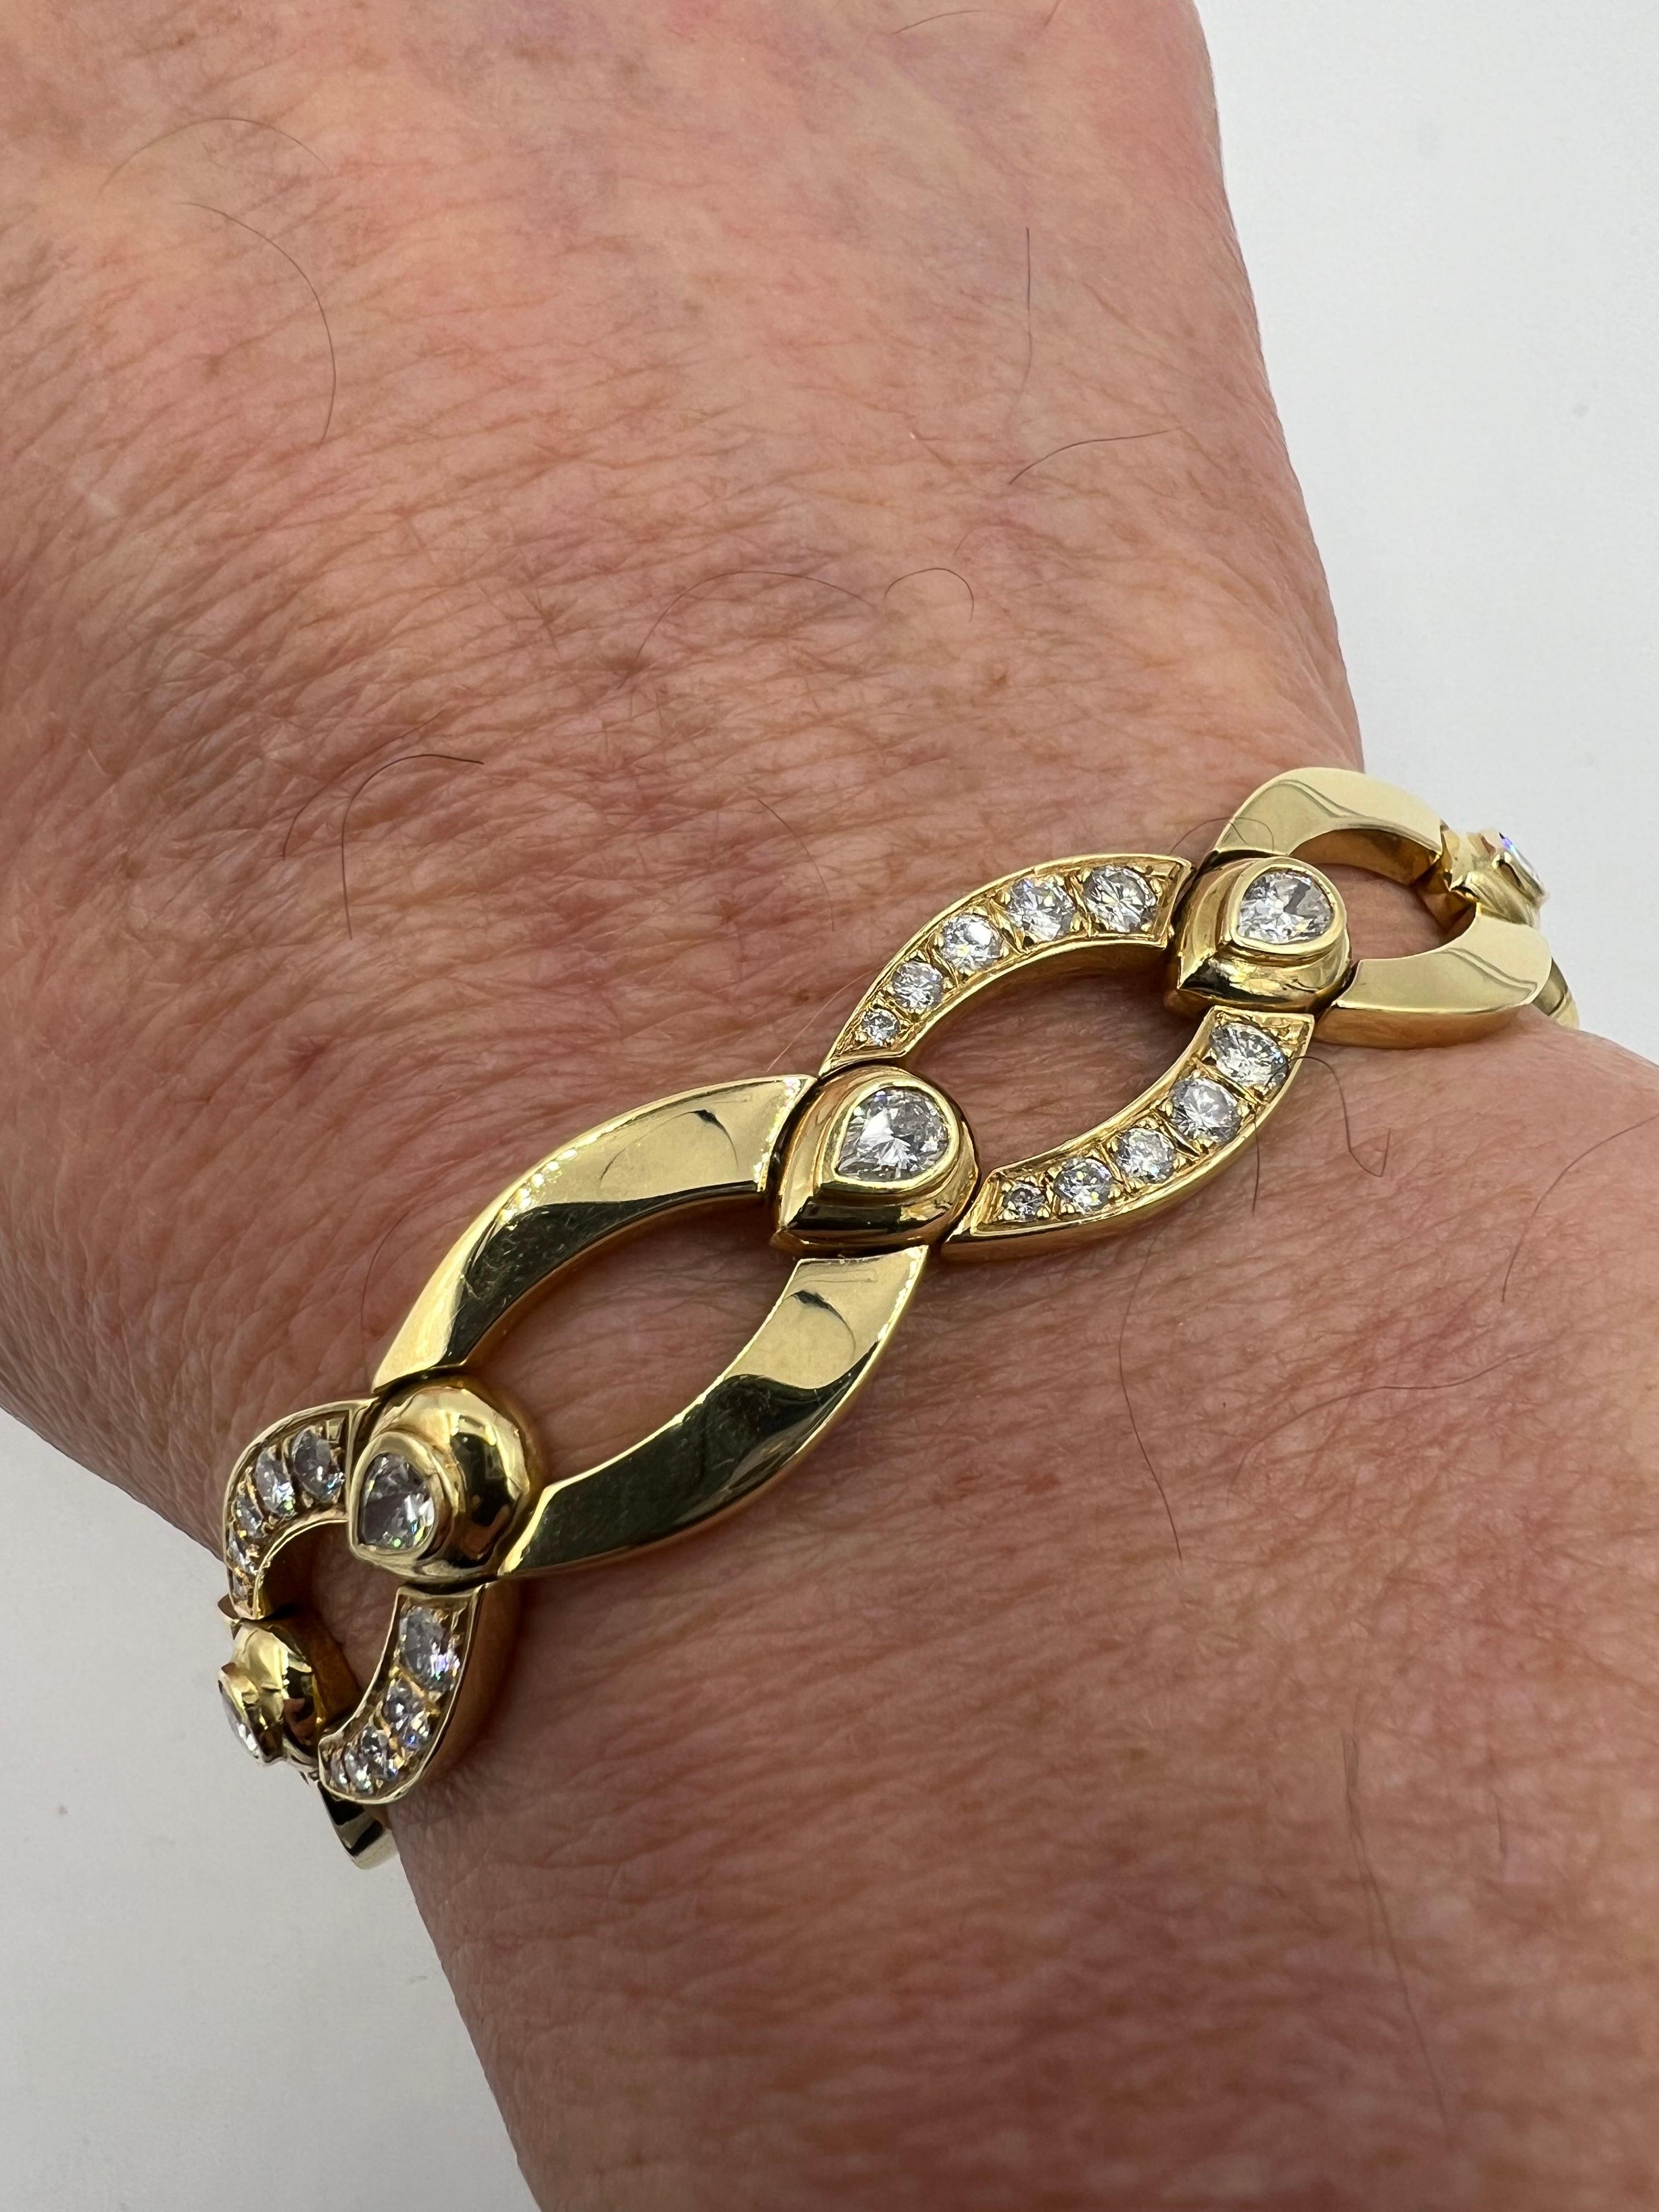 1970s Diamond Yellow Gold Link Bracelet For Sale 2